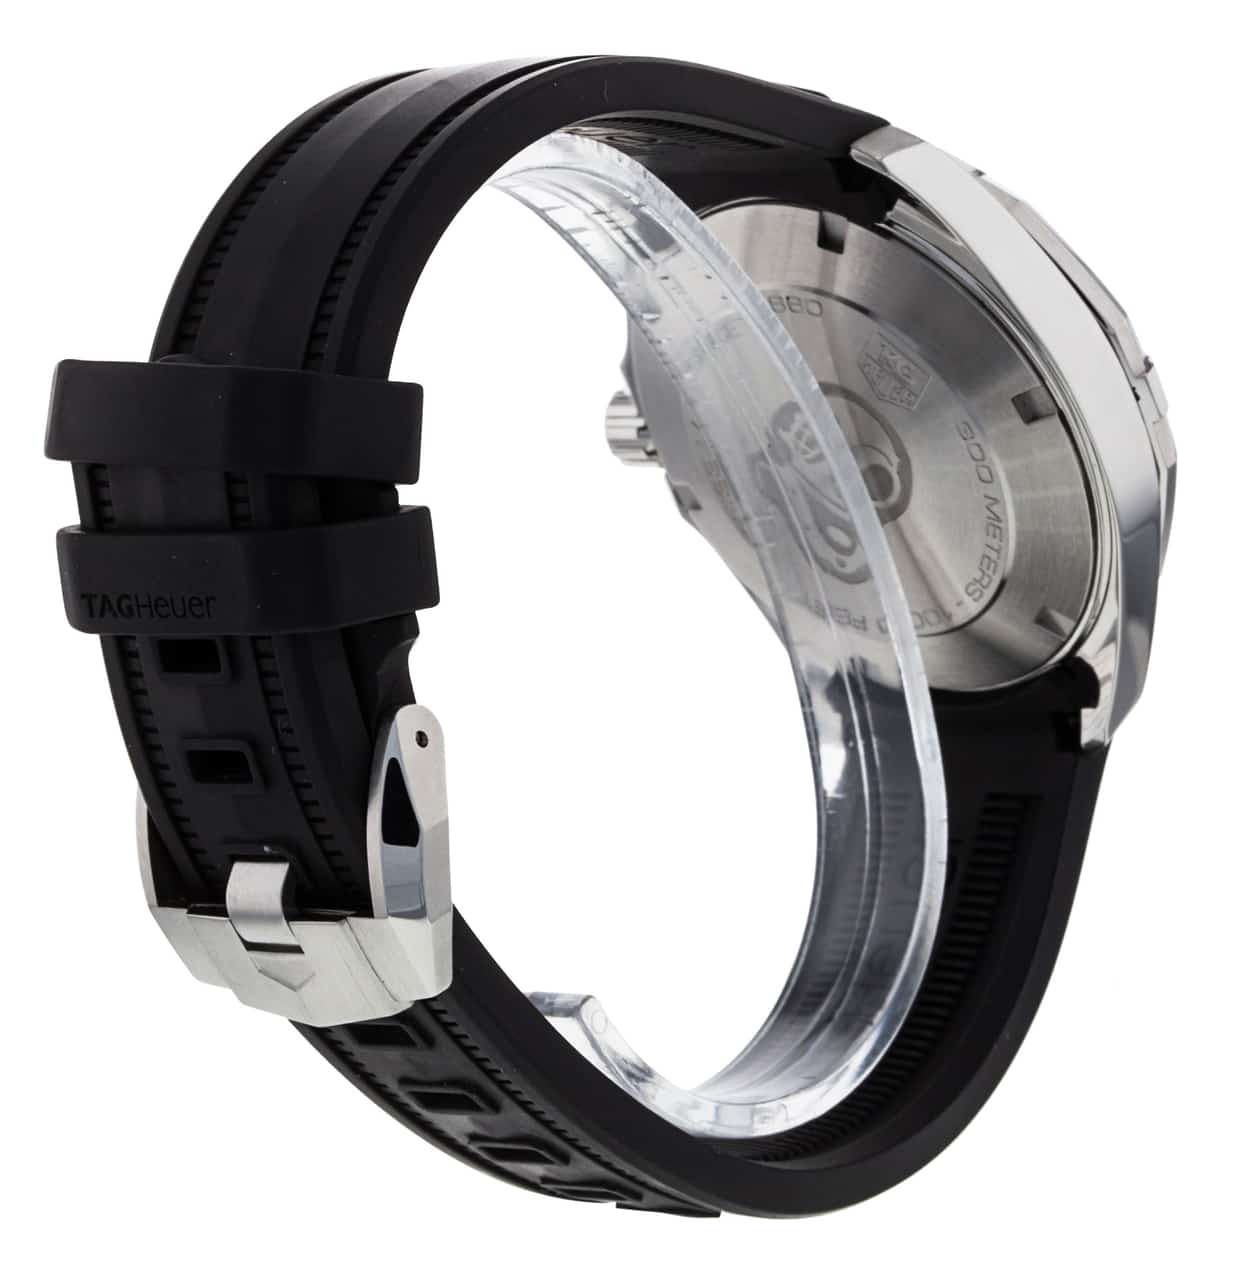 Tag Heuer Aquaracer Quartz Black Dial Black Rubber Strap Watch for Men - WAY1110.FT8021